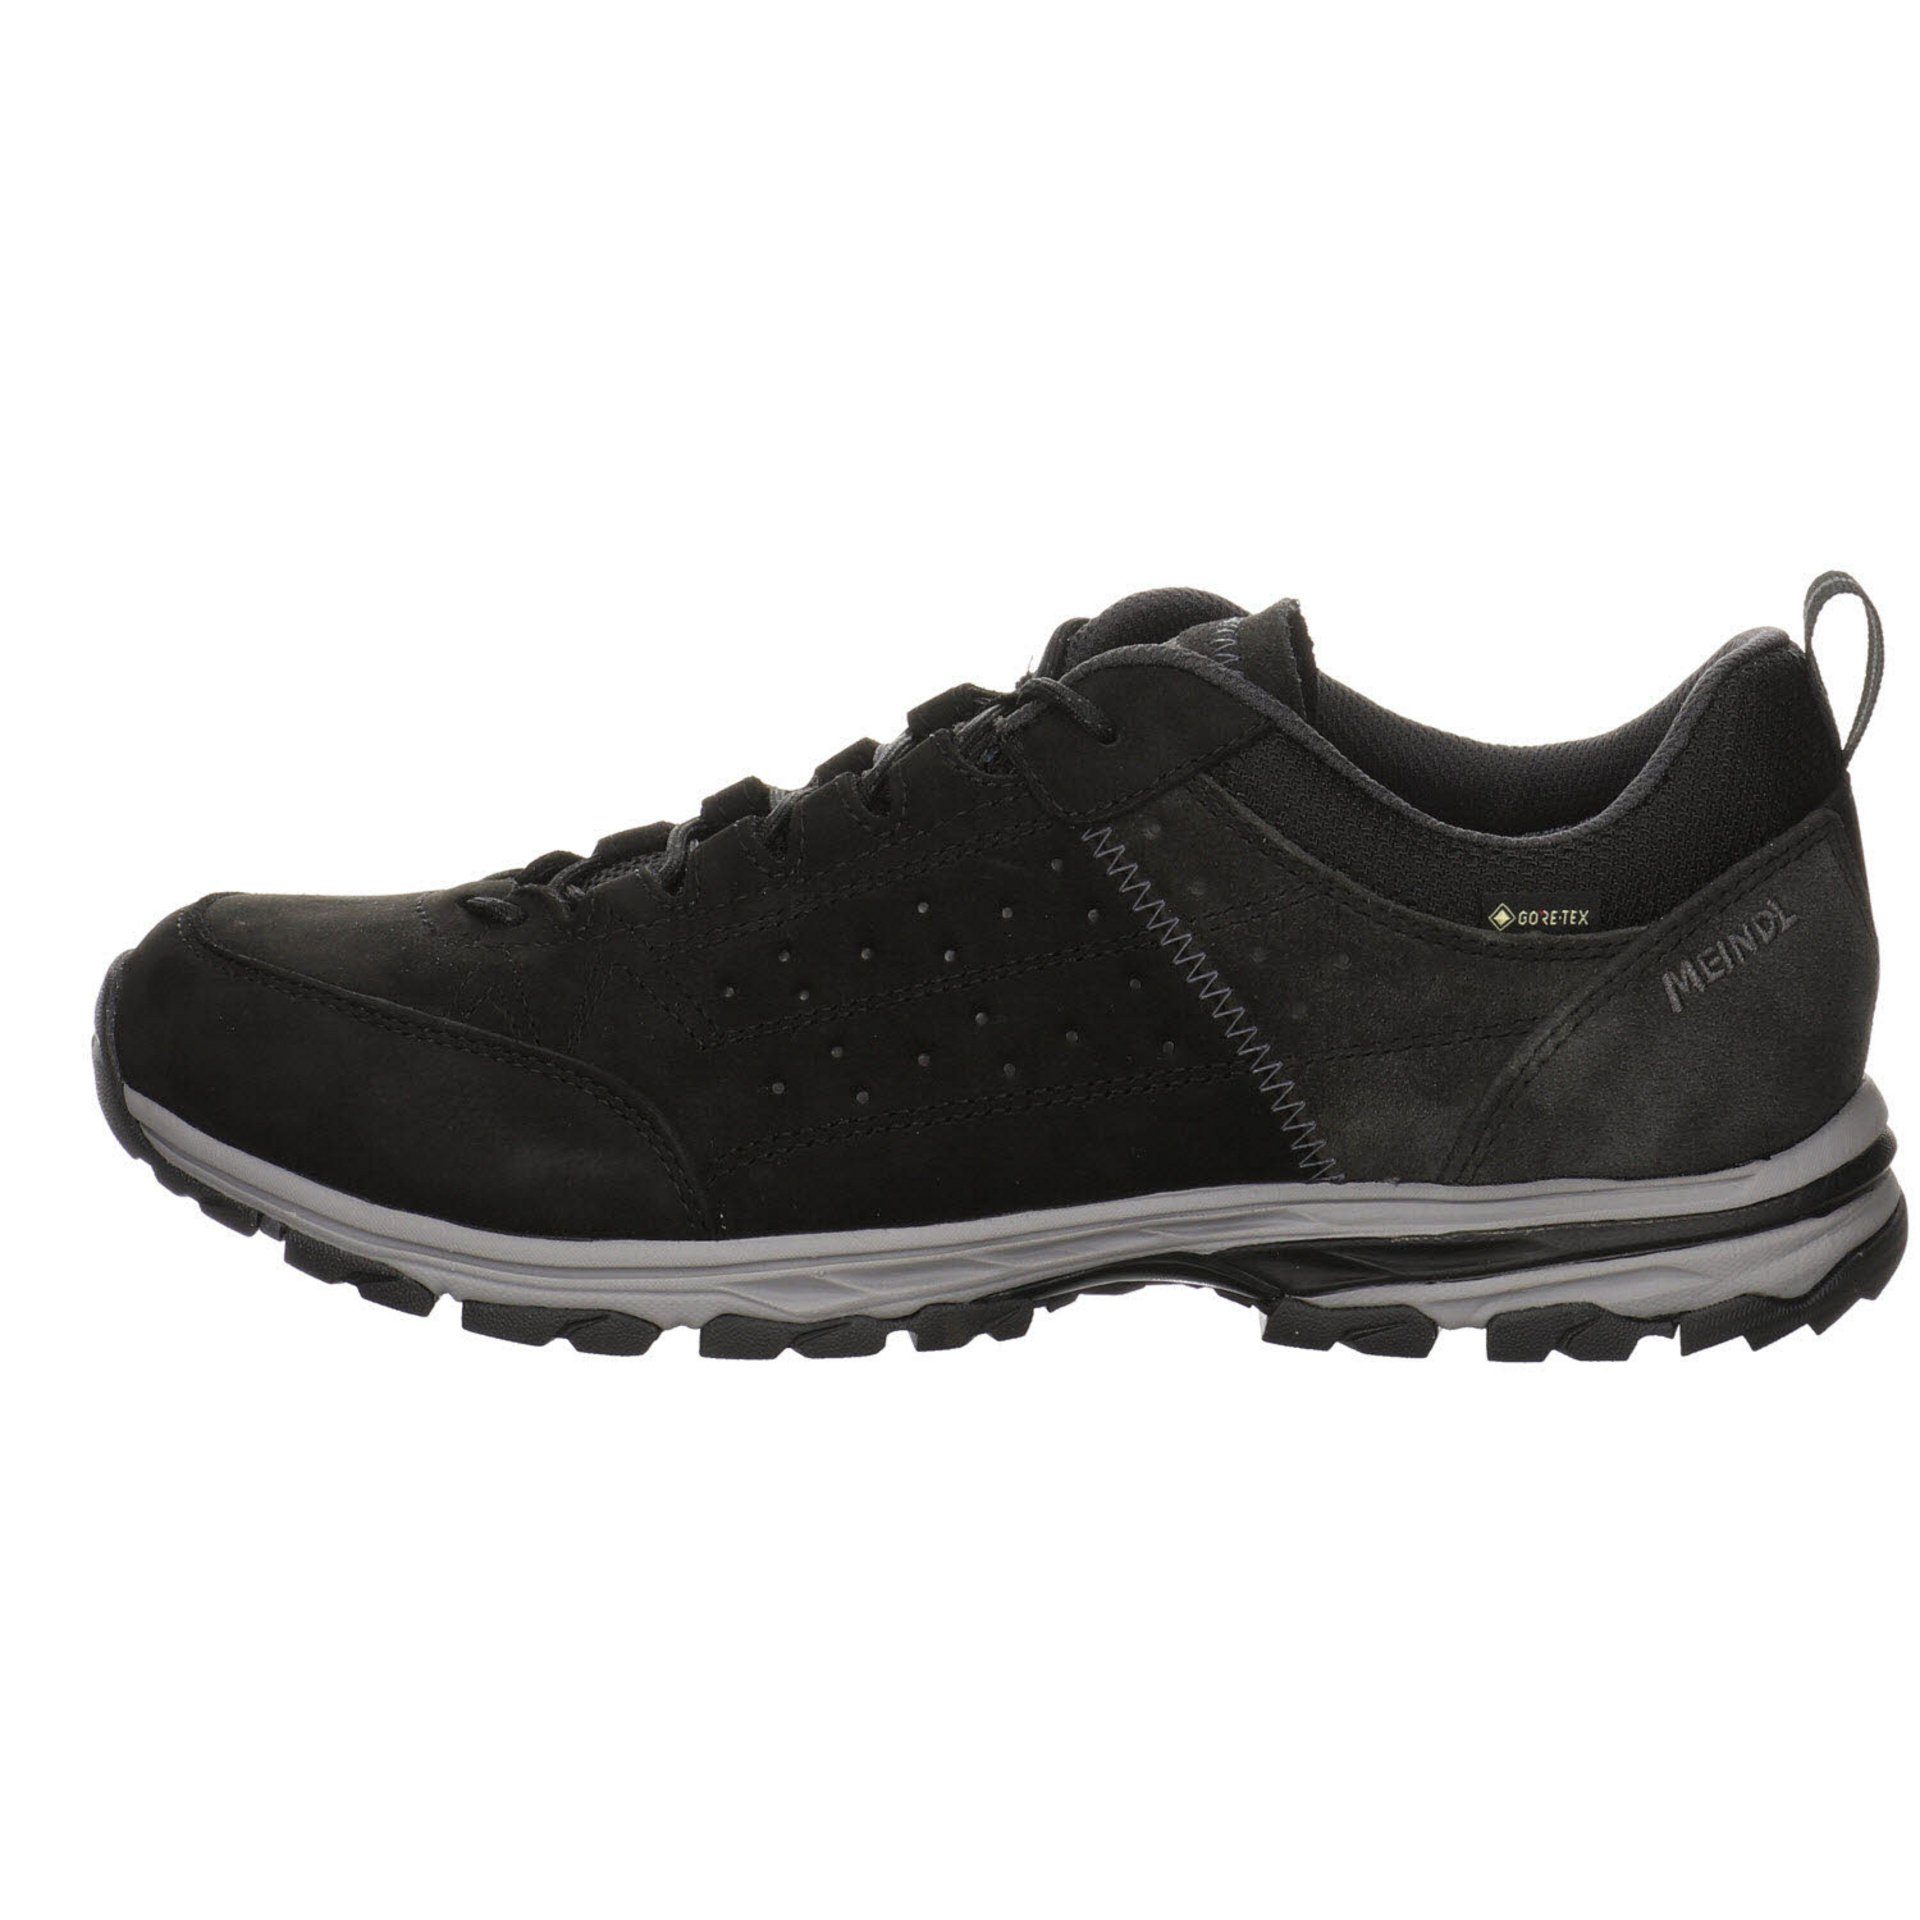 Meindl Leder-/Textilkombination Outdoor Outdoorschuh schwarz GTX Durban Outdoorschuh Herren dunkel Schuhe